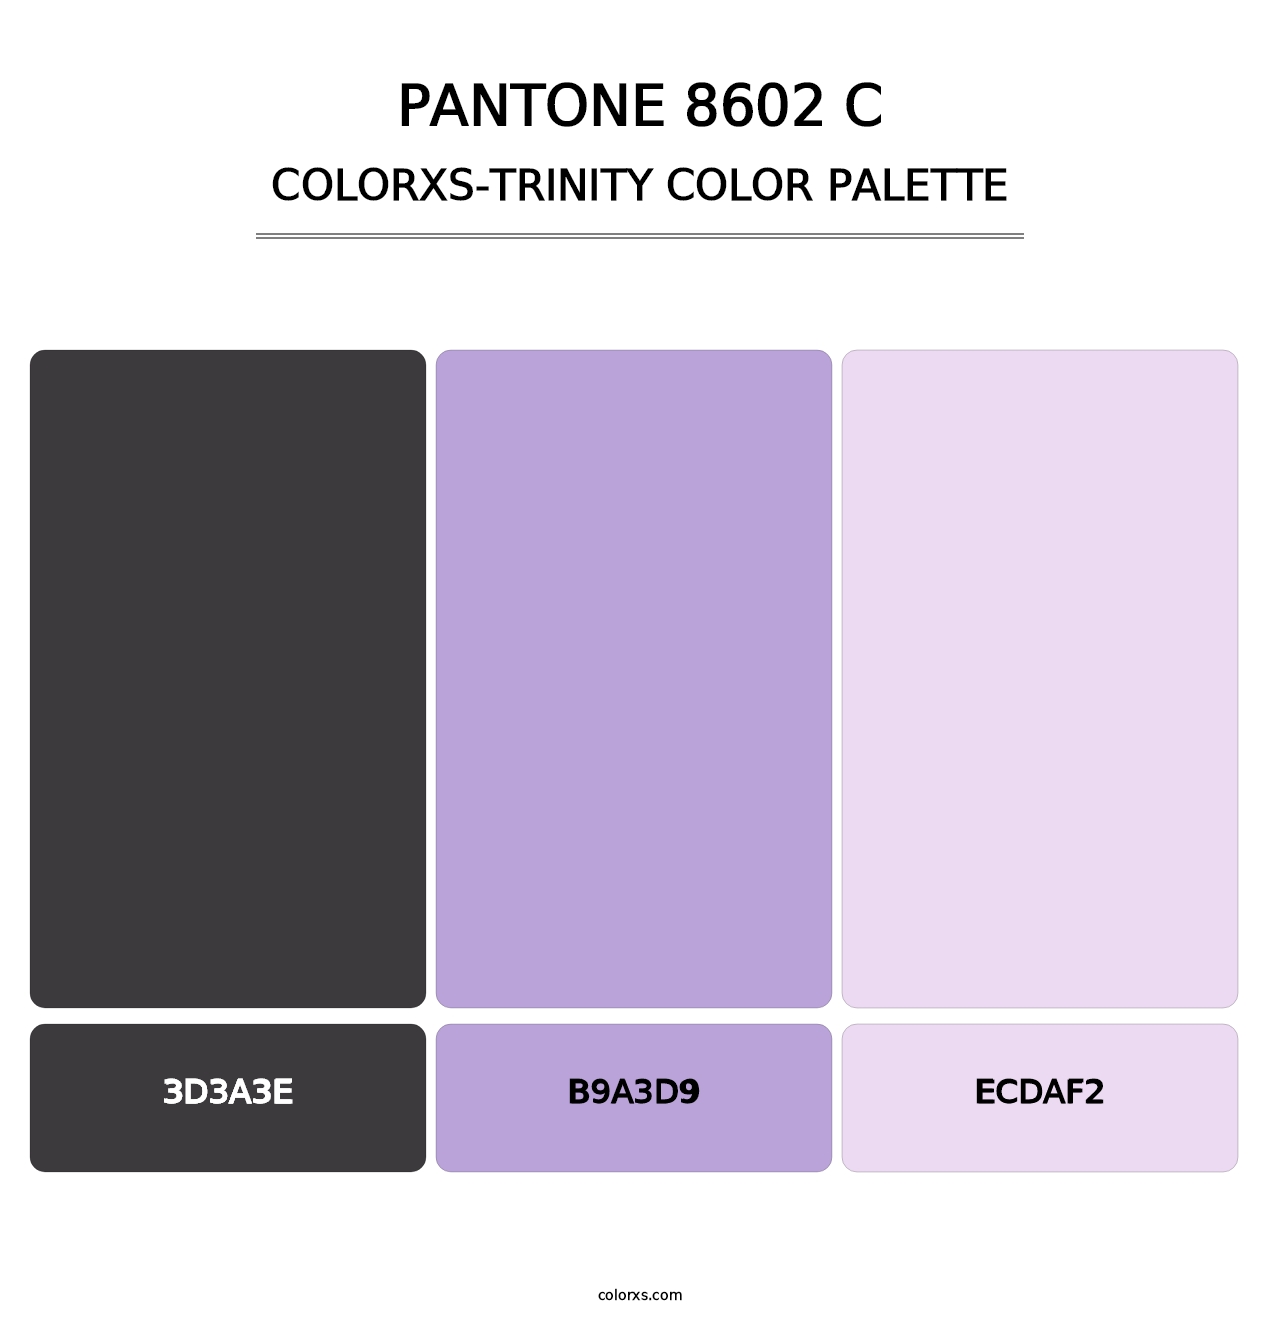 PANTONE 8602 C - Colorxs Trinity Palette